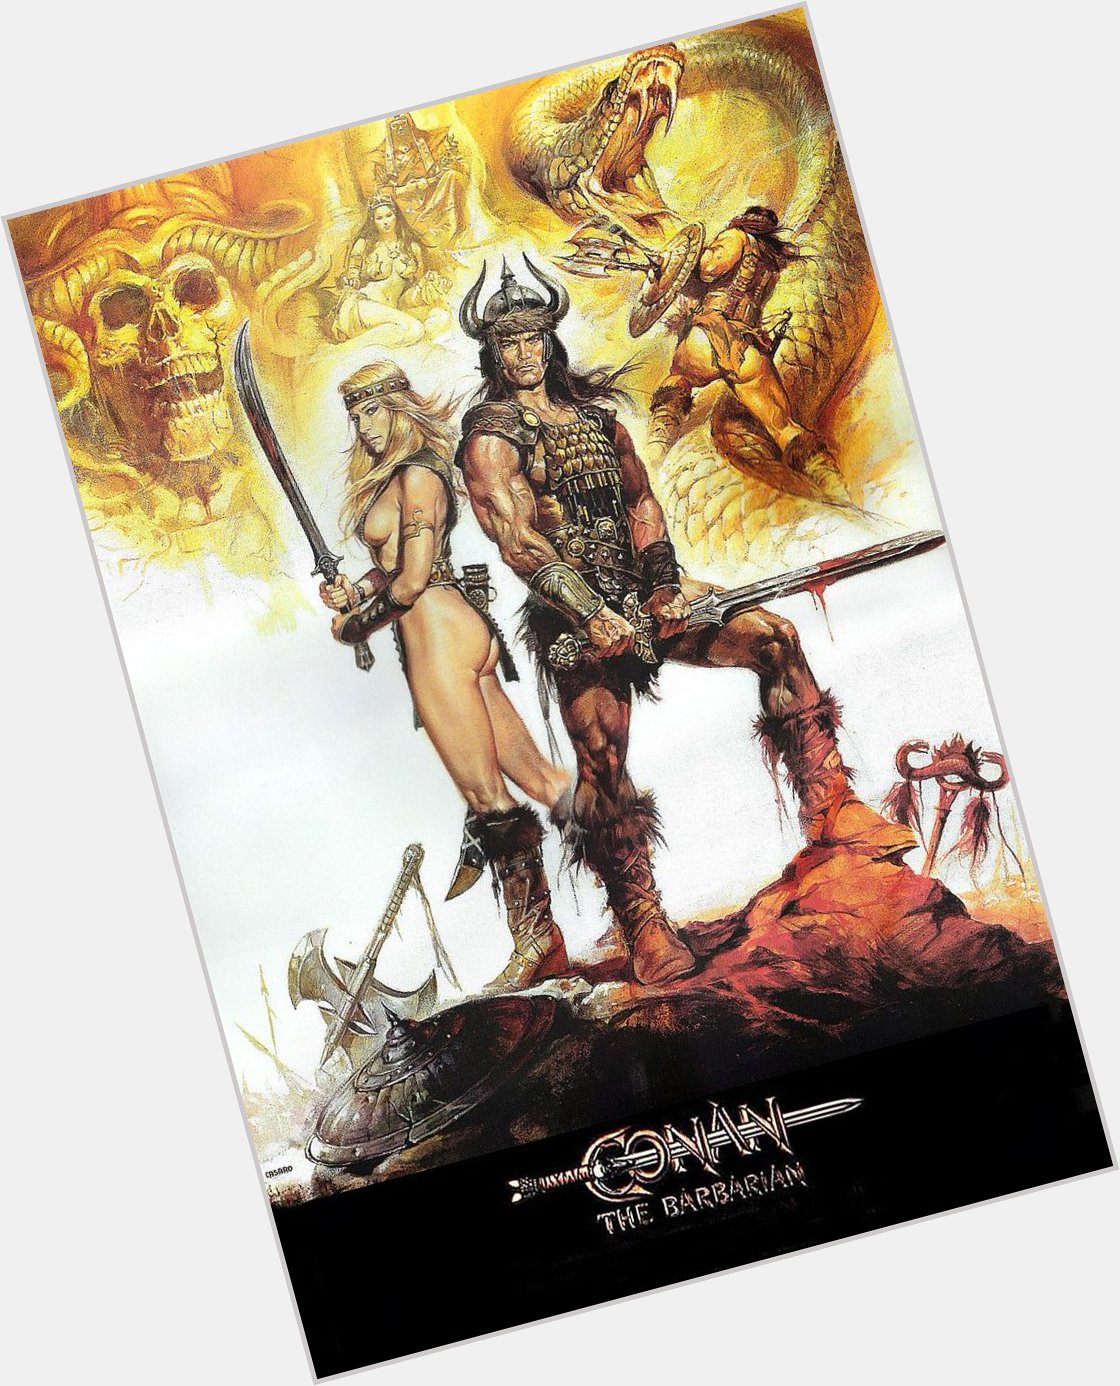 Conan the Barbarian  (1982)
Happy Birthday, John Milius! 